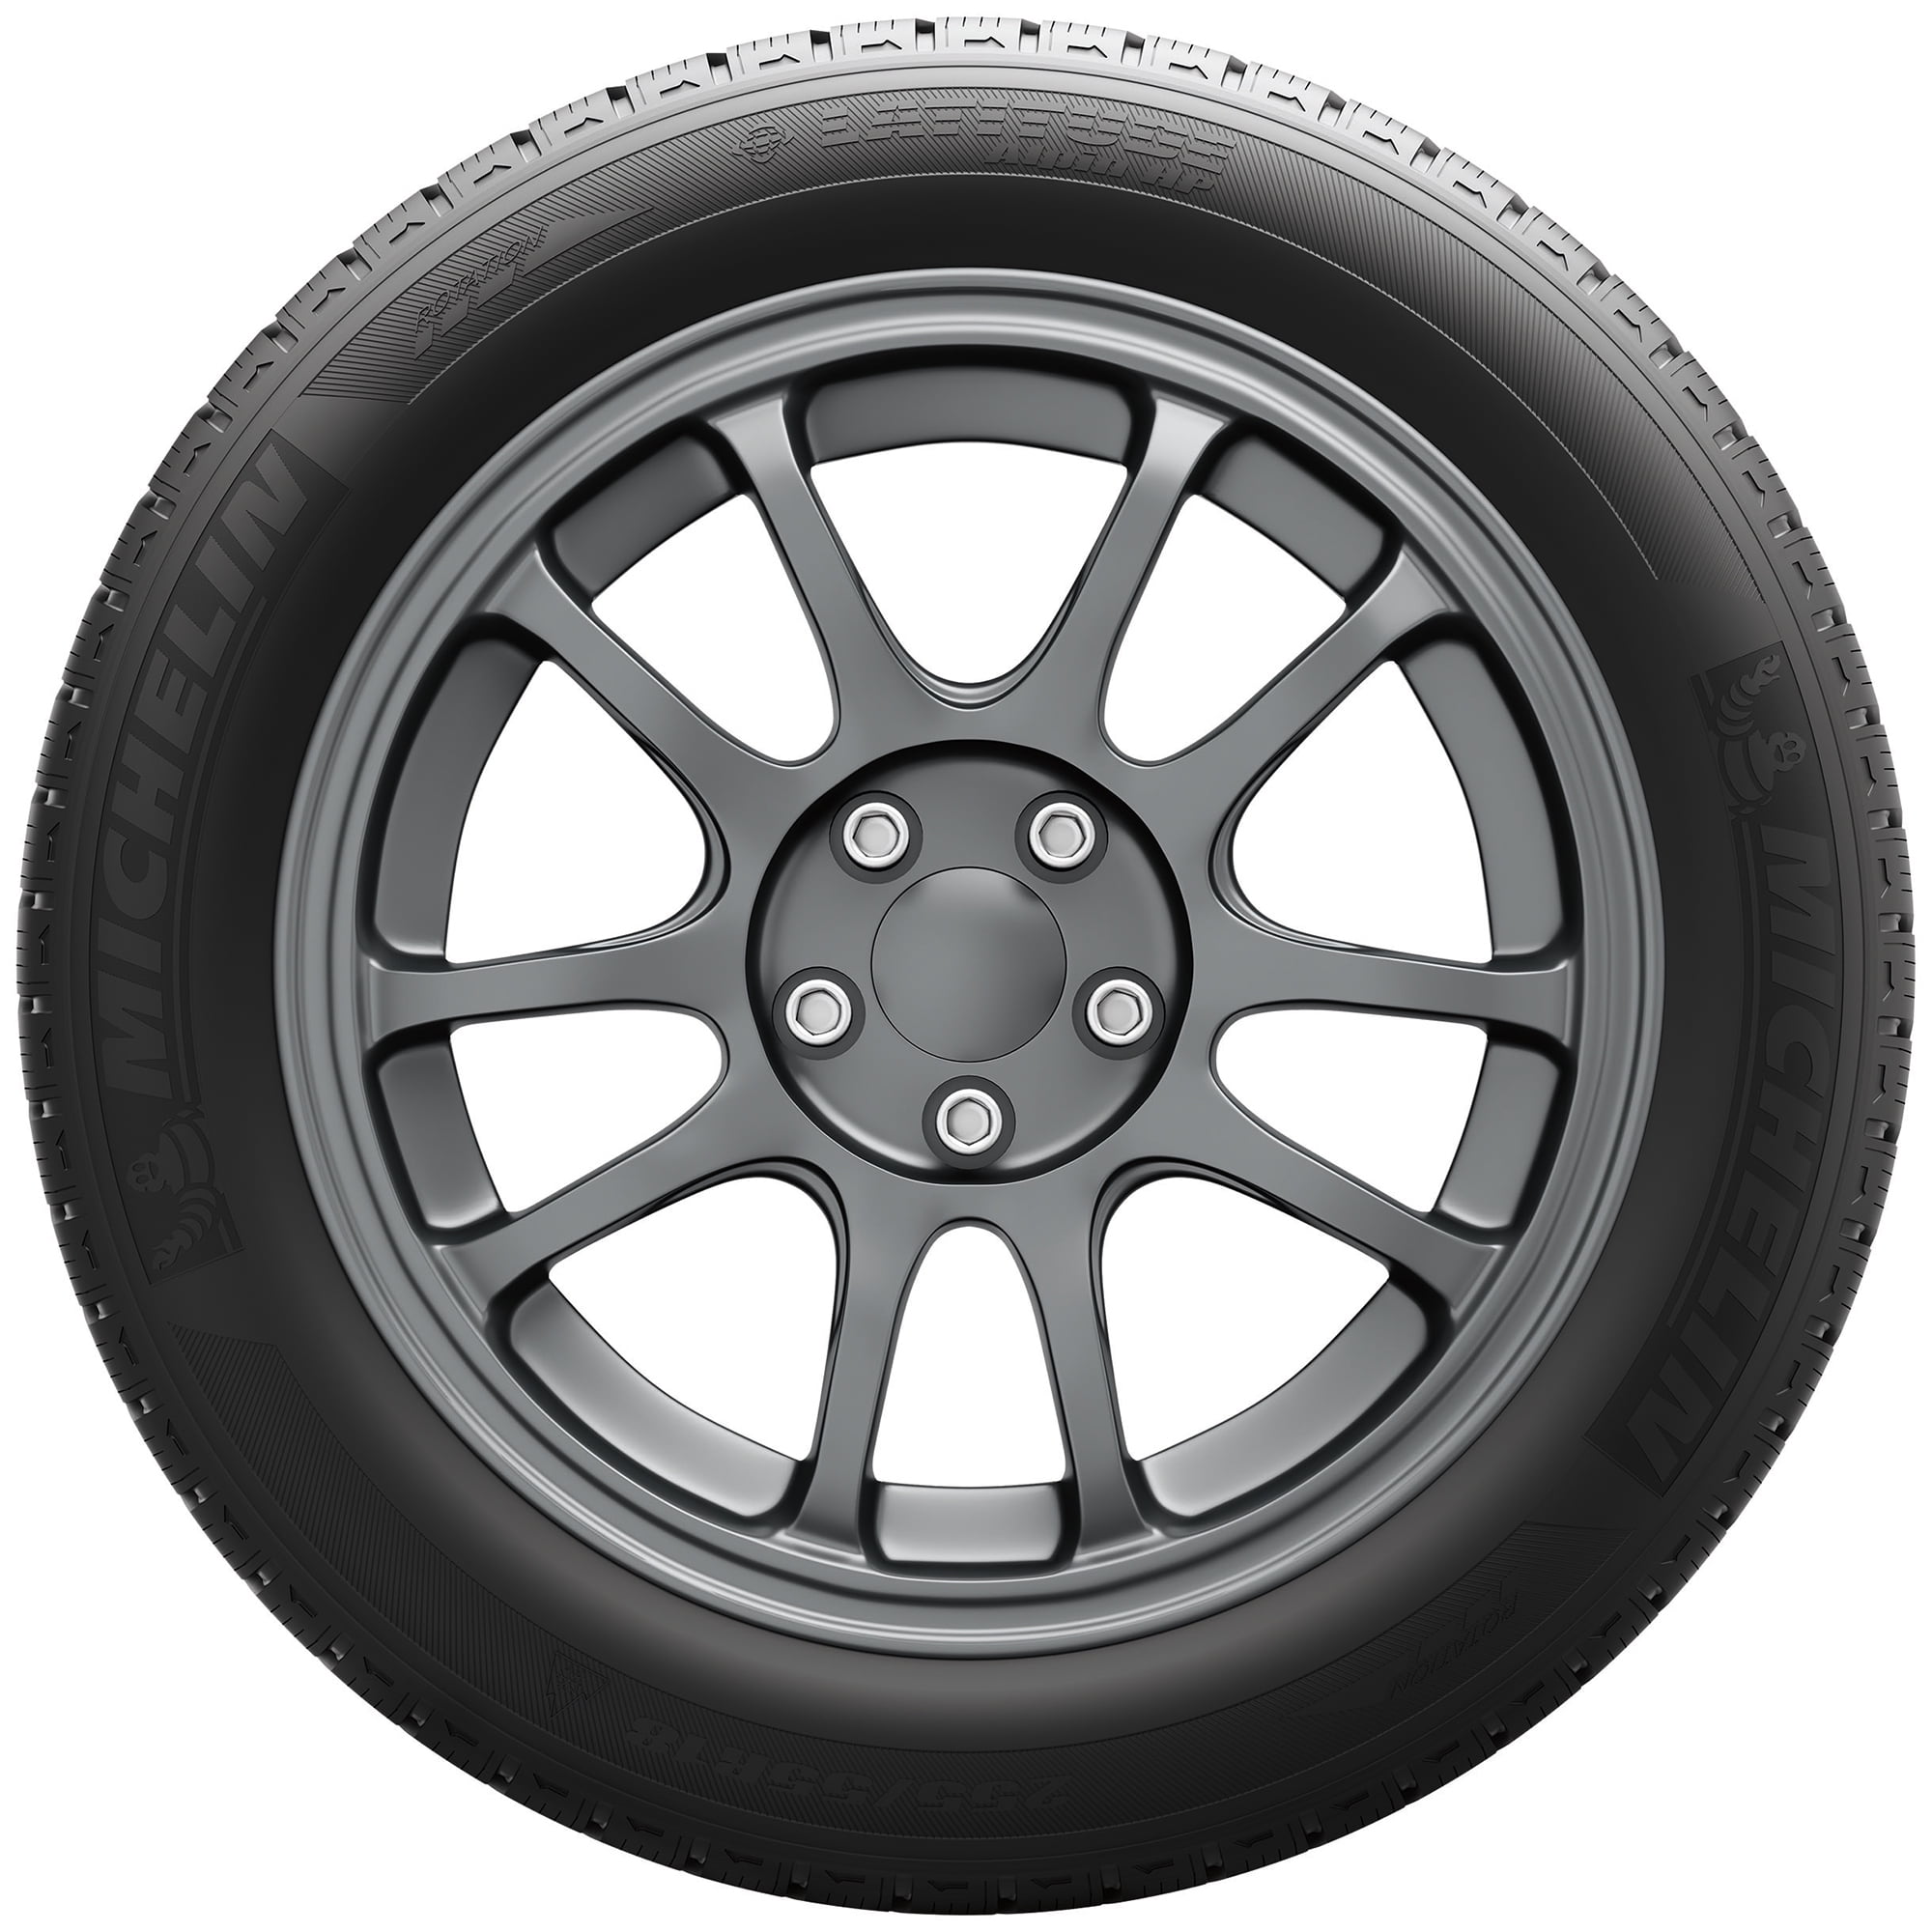 255/55R18 Alpin High 105H Michelin Tire Latitude Performance